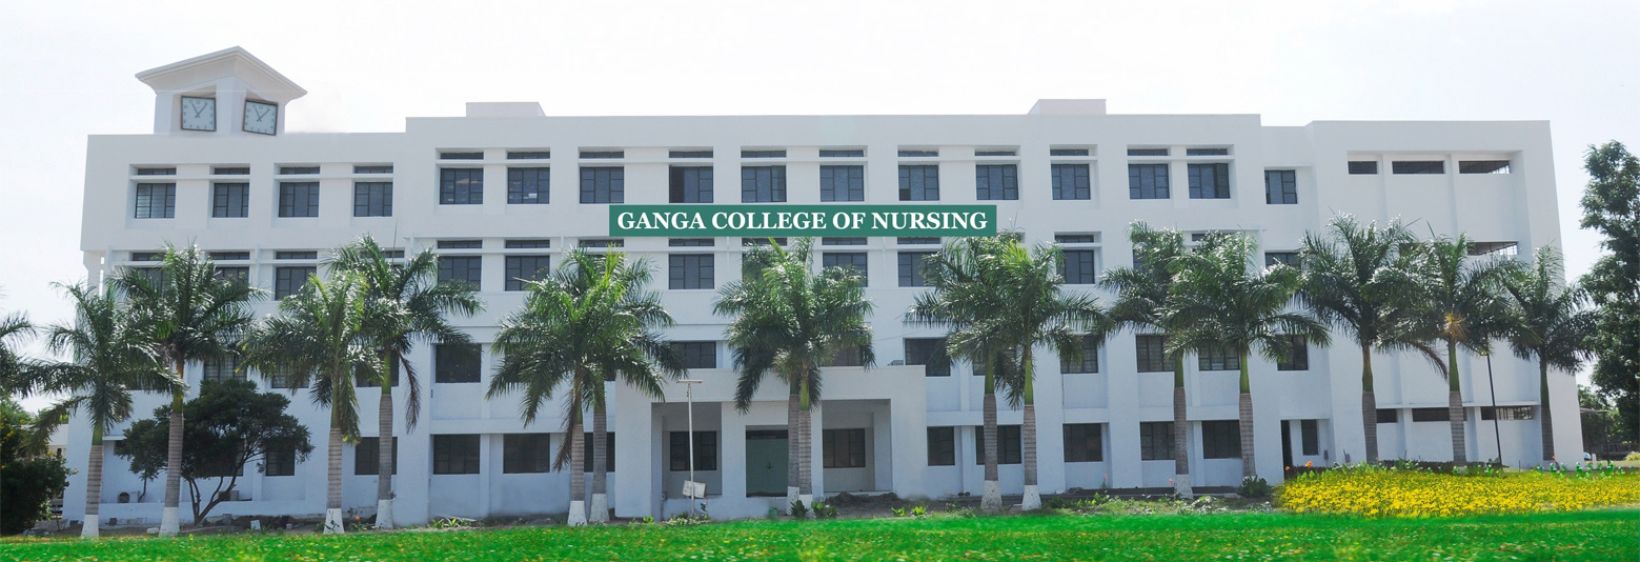 Ganga College of Nursing - Vattamalaipalayam, Coimbatore